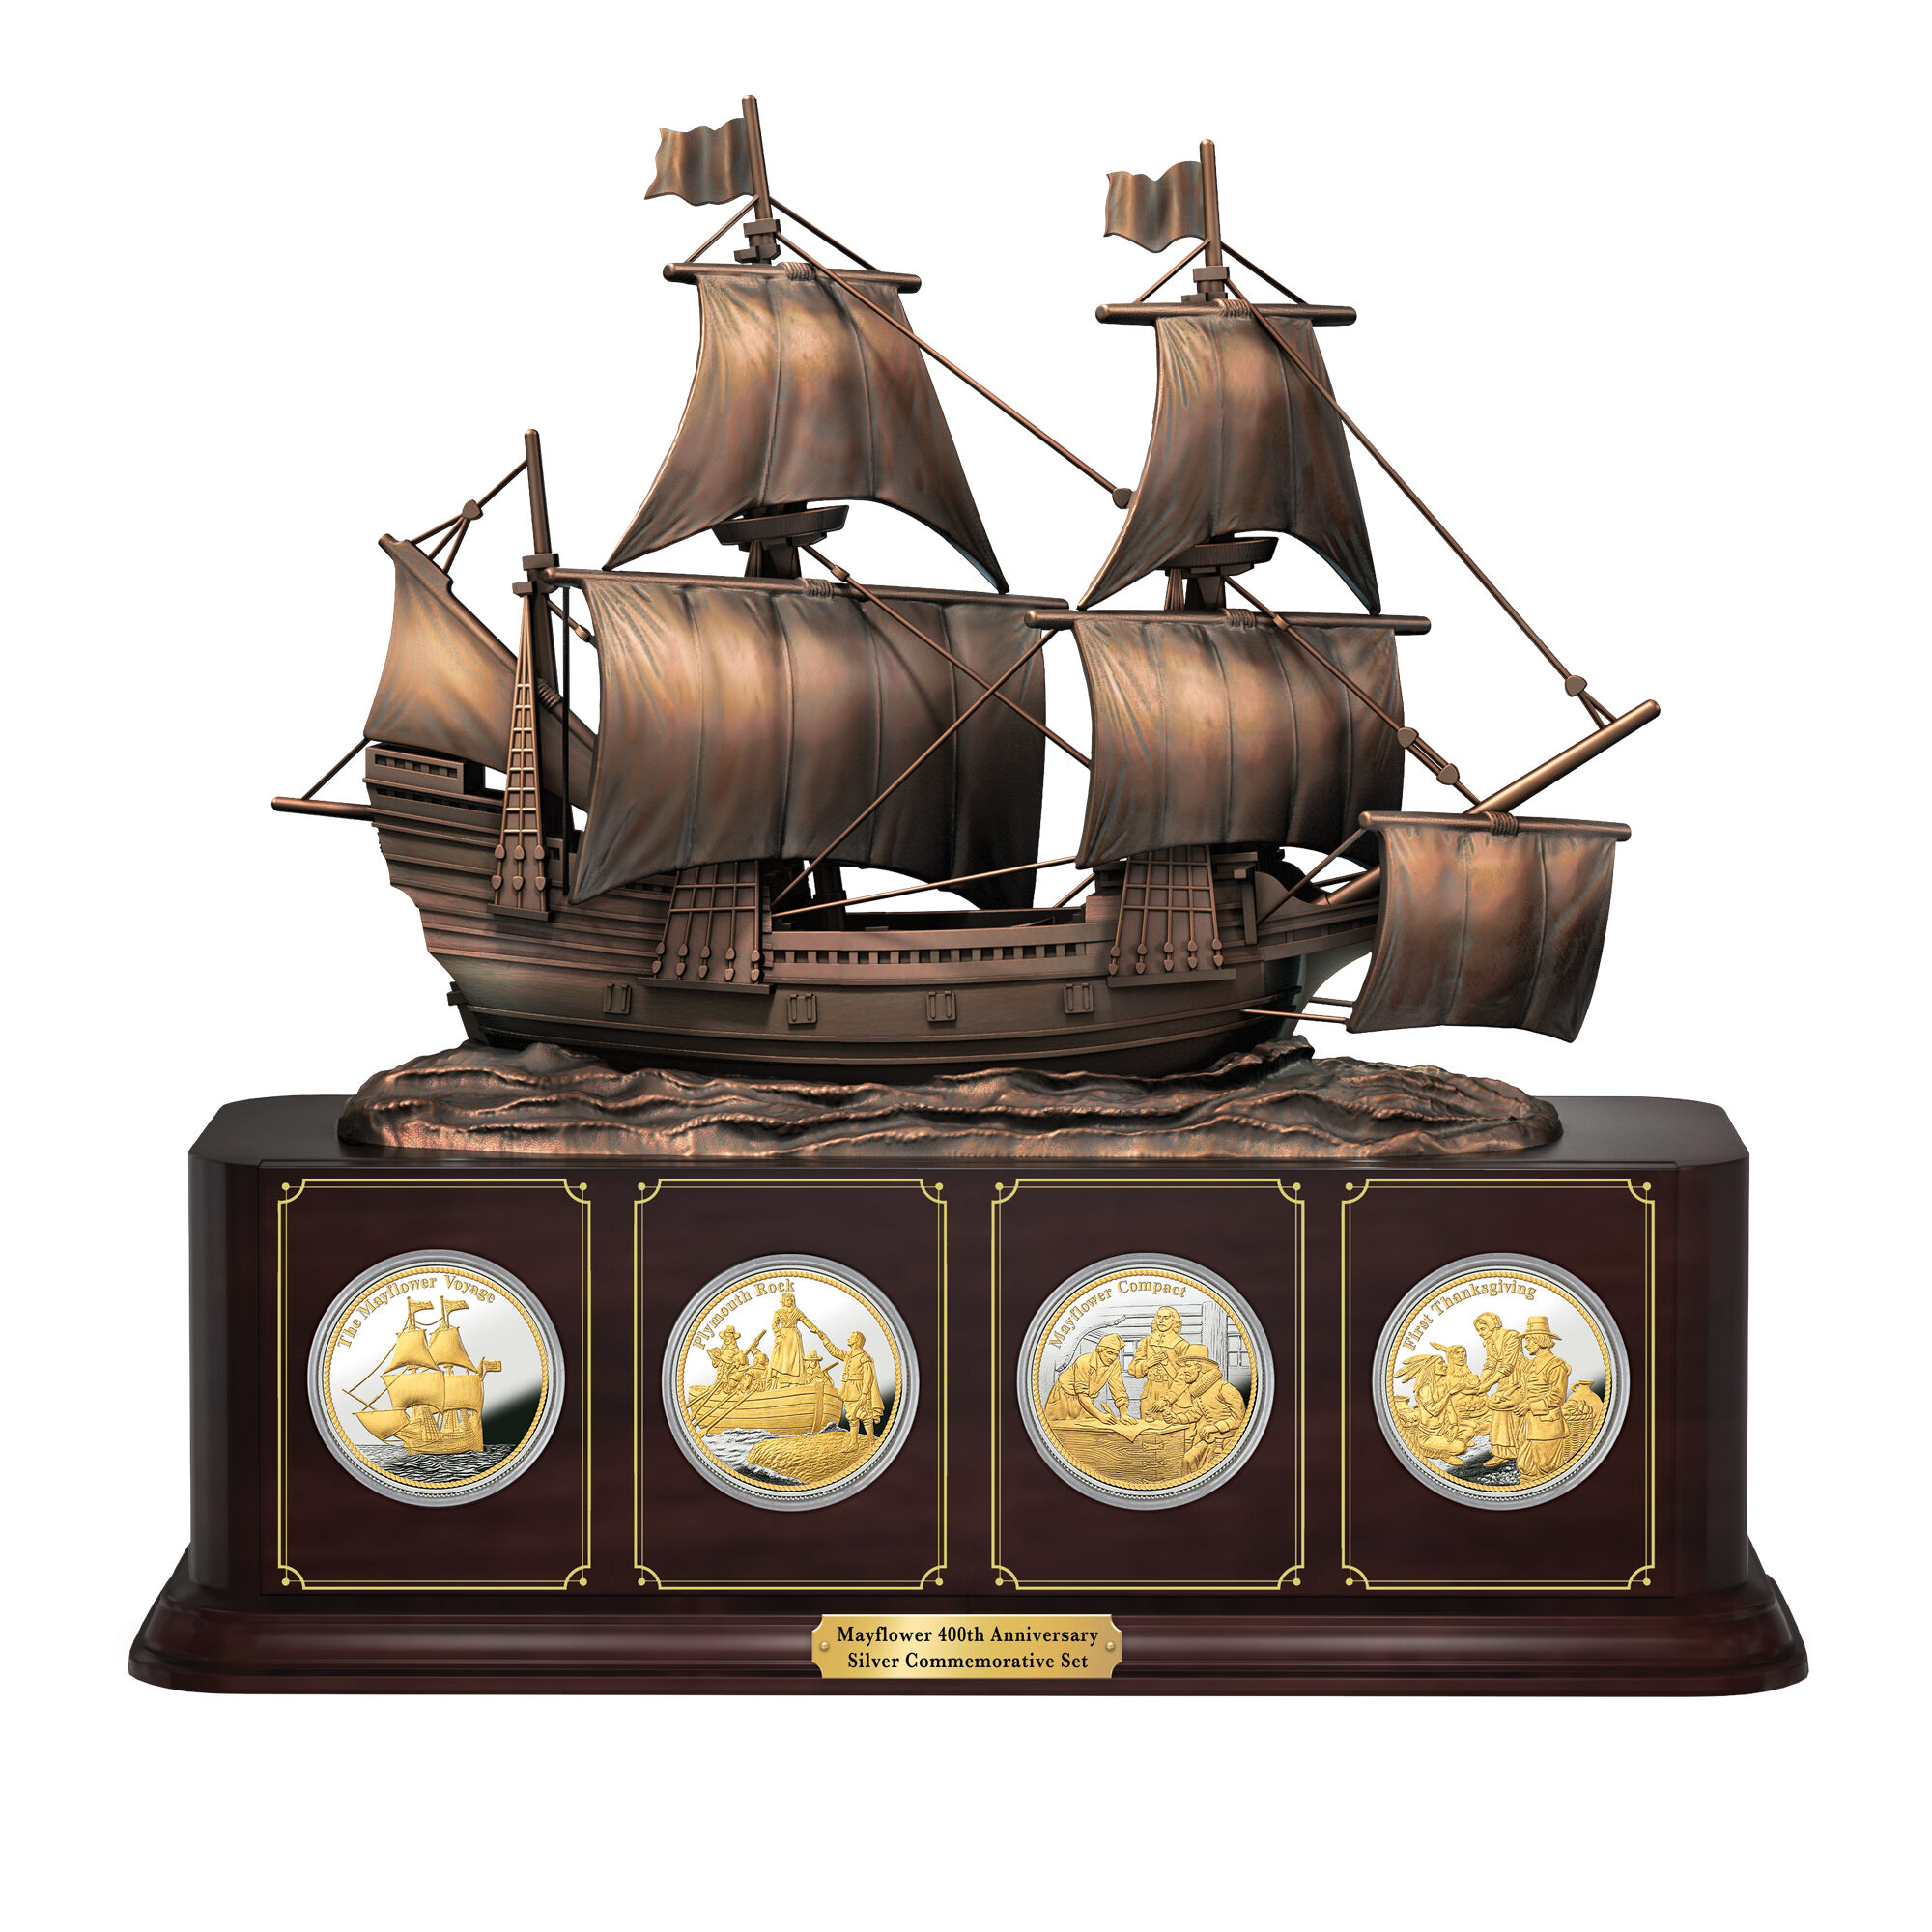 The Mayflower 400th Anniversary Silver Bullion Commemorative Set 6699 0029 a display